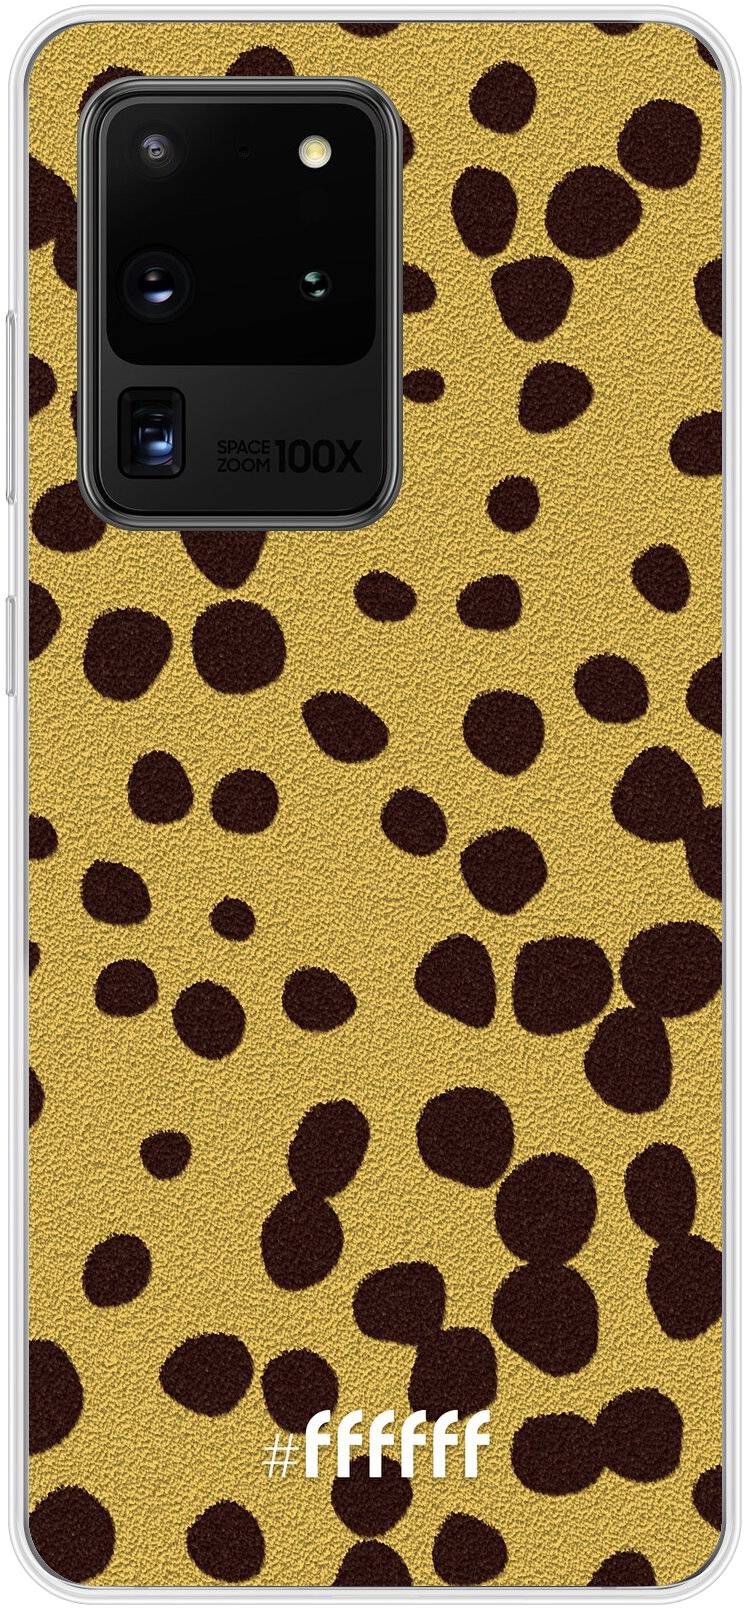 Cheetah Print Galaxy S20 Ultra